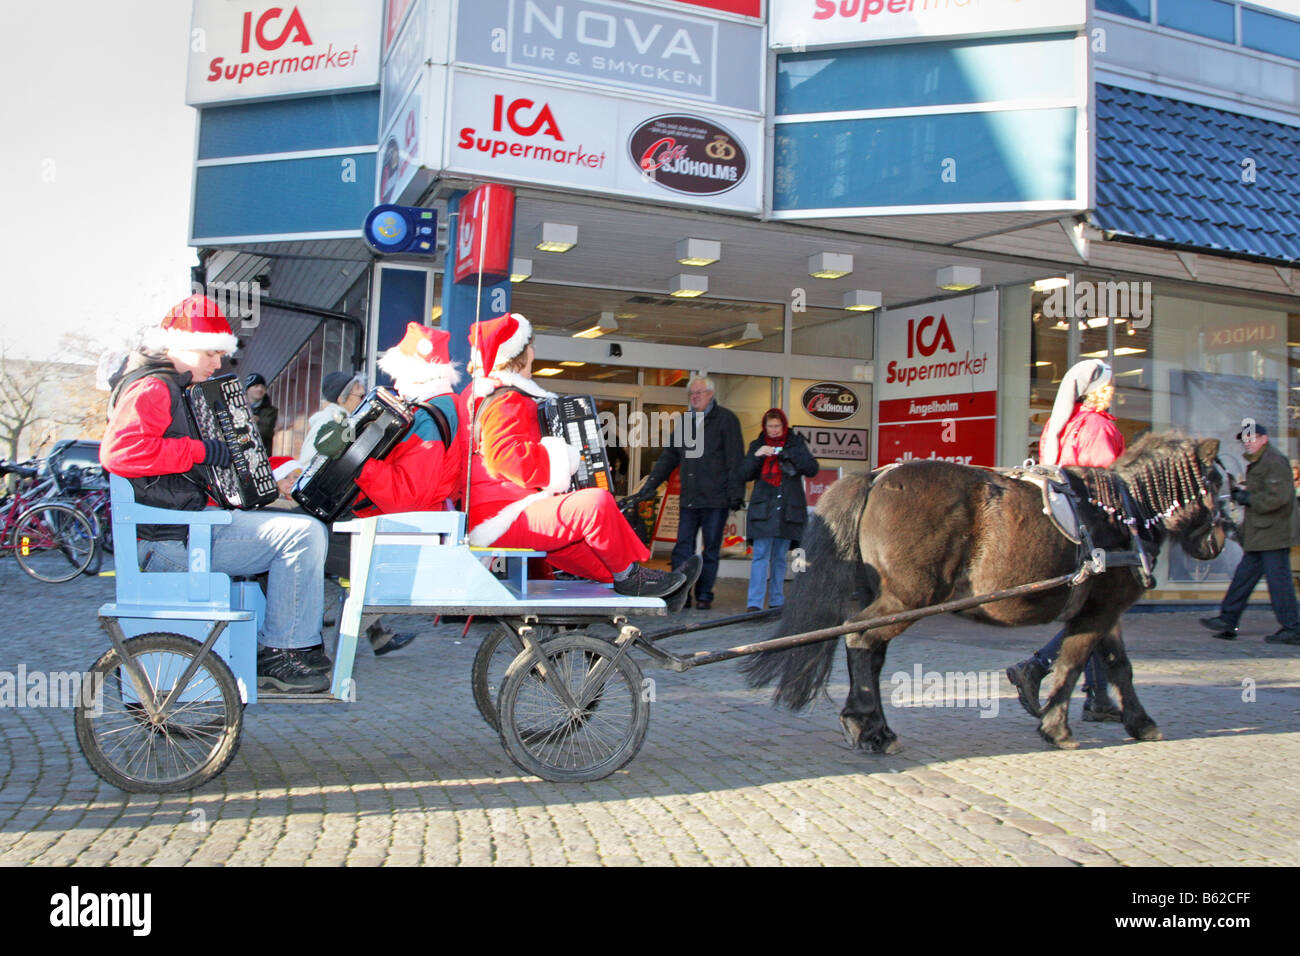 swedish santa claus parade with horse and wagon svensk tomteparad med häst och vagn Stock Photo